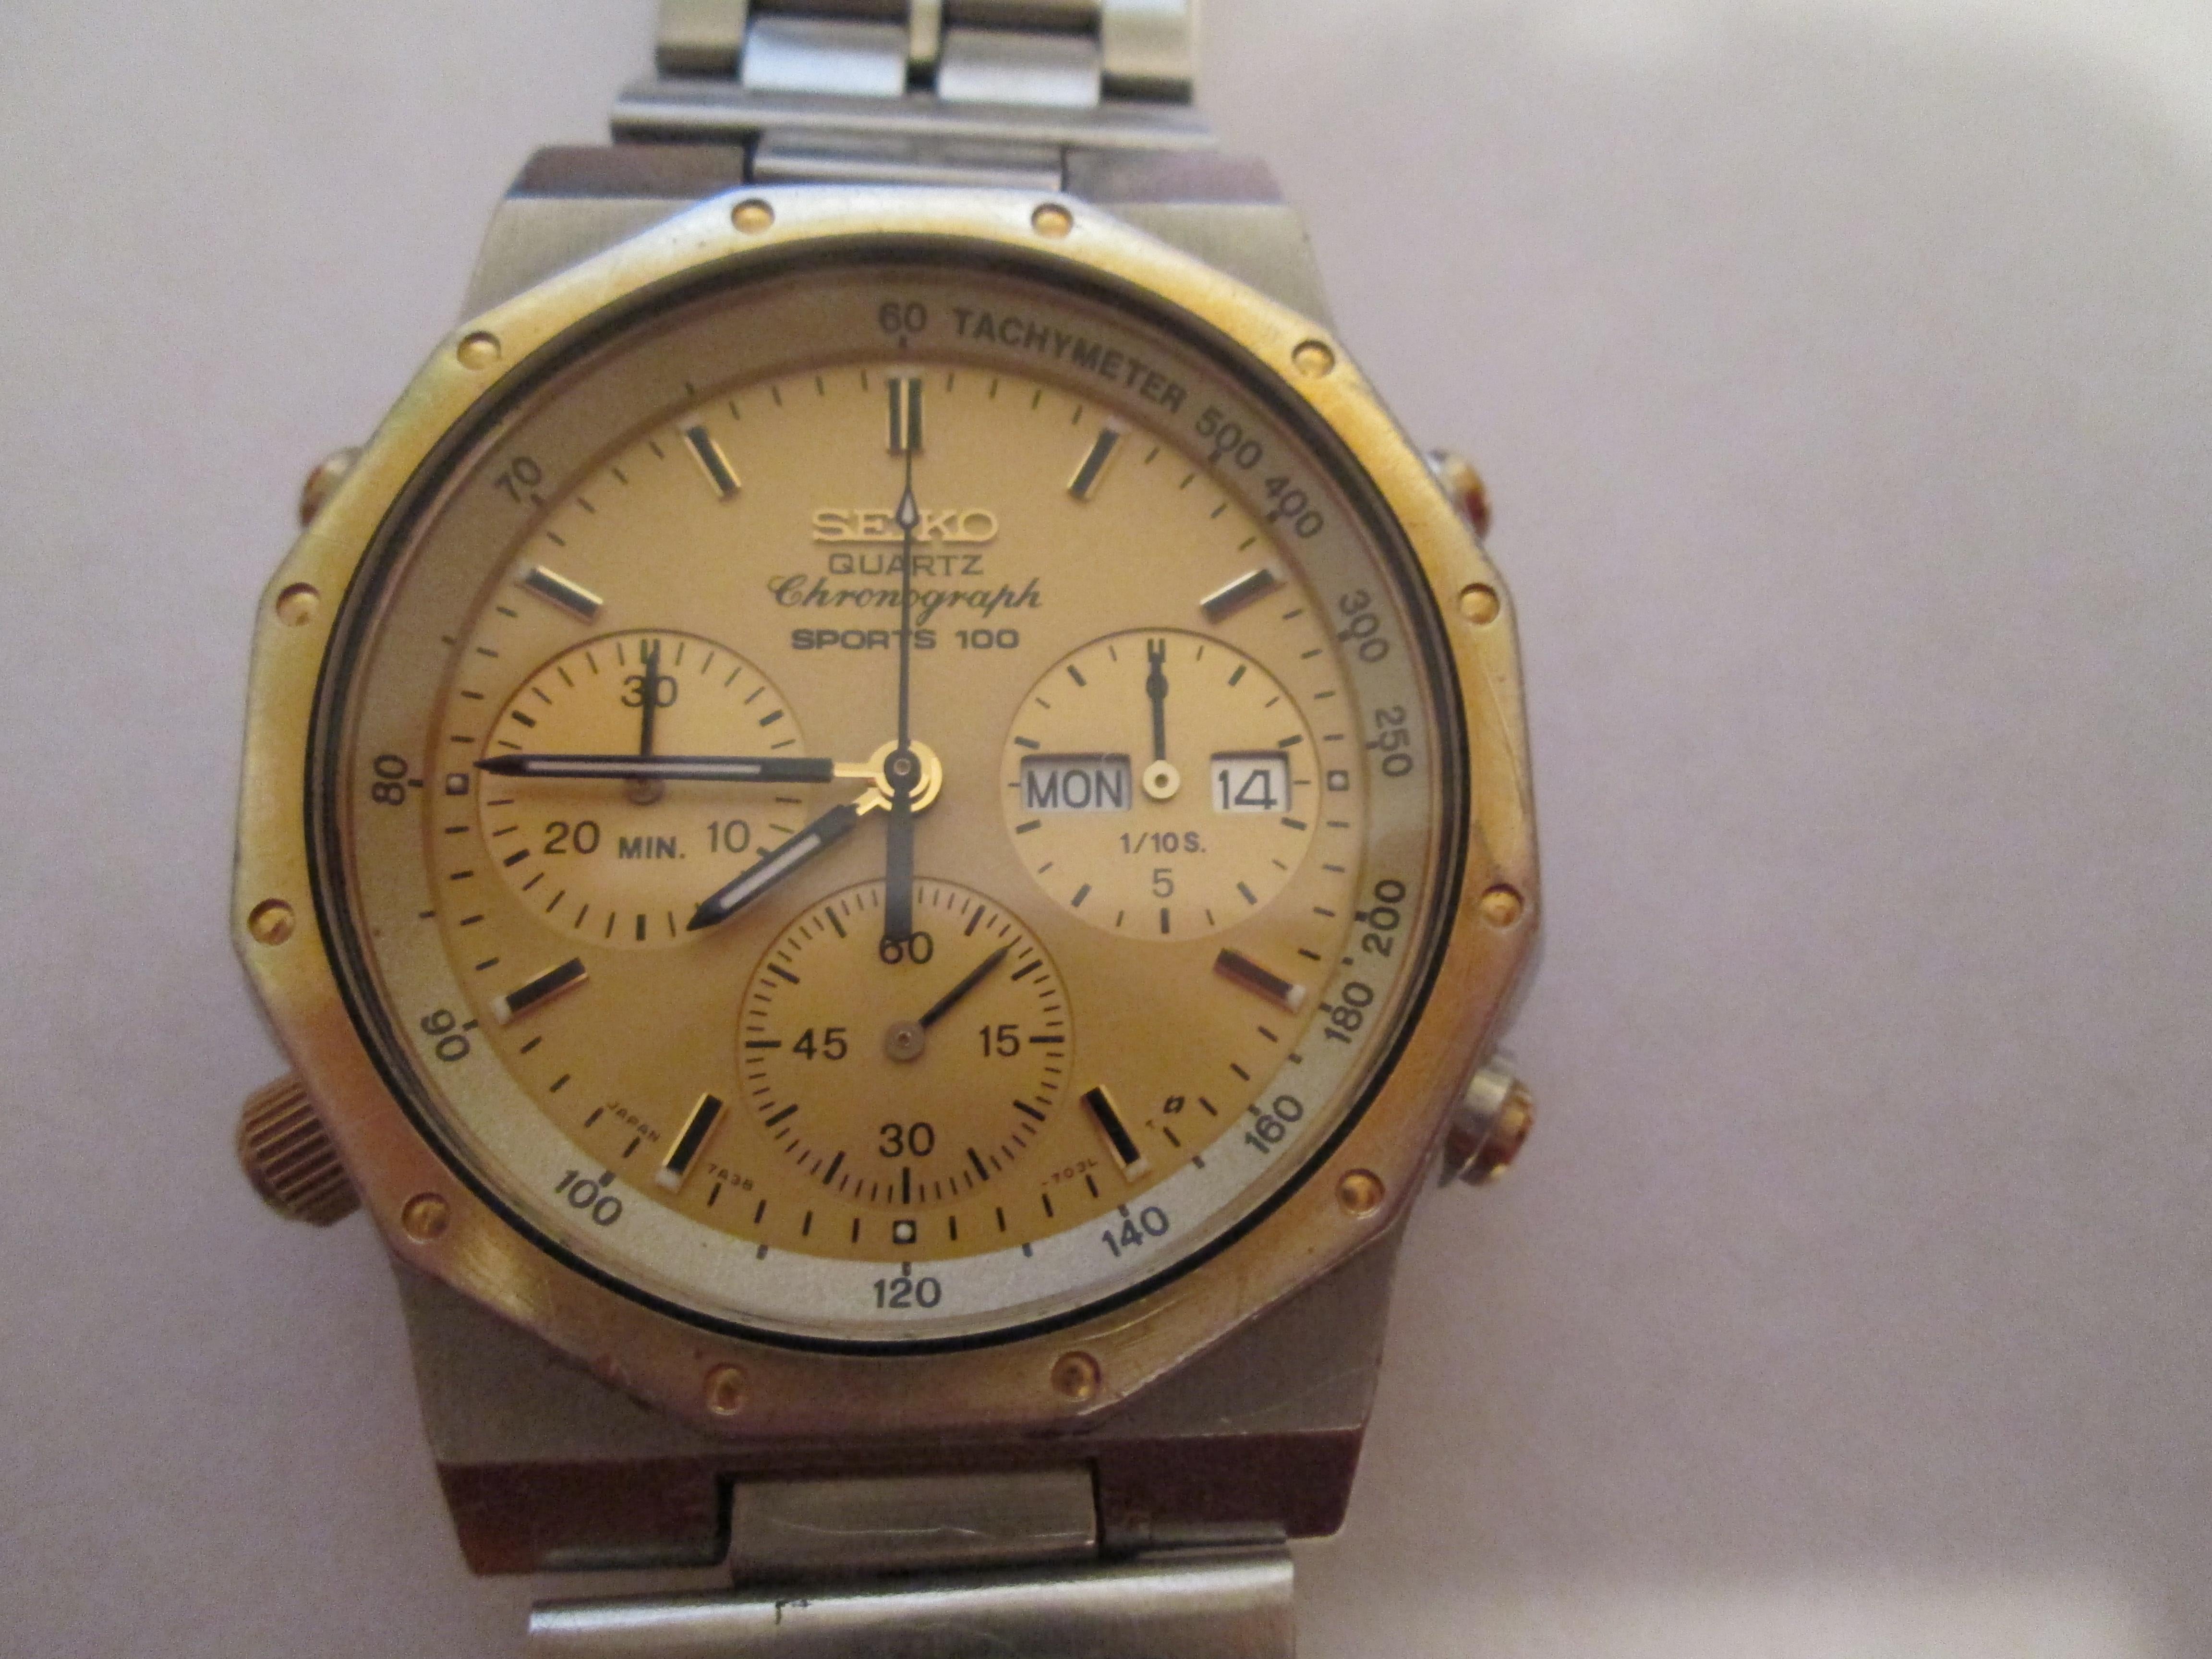 FSOT Seiko 7A38-702H 15 jewel Chronograph $110 | WatchUSeek Watch Forums